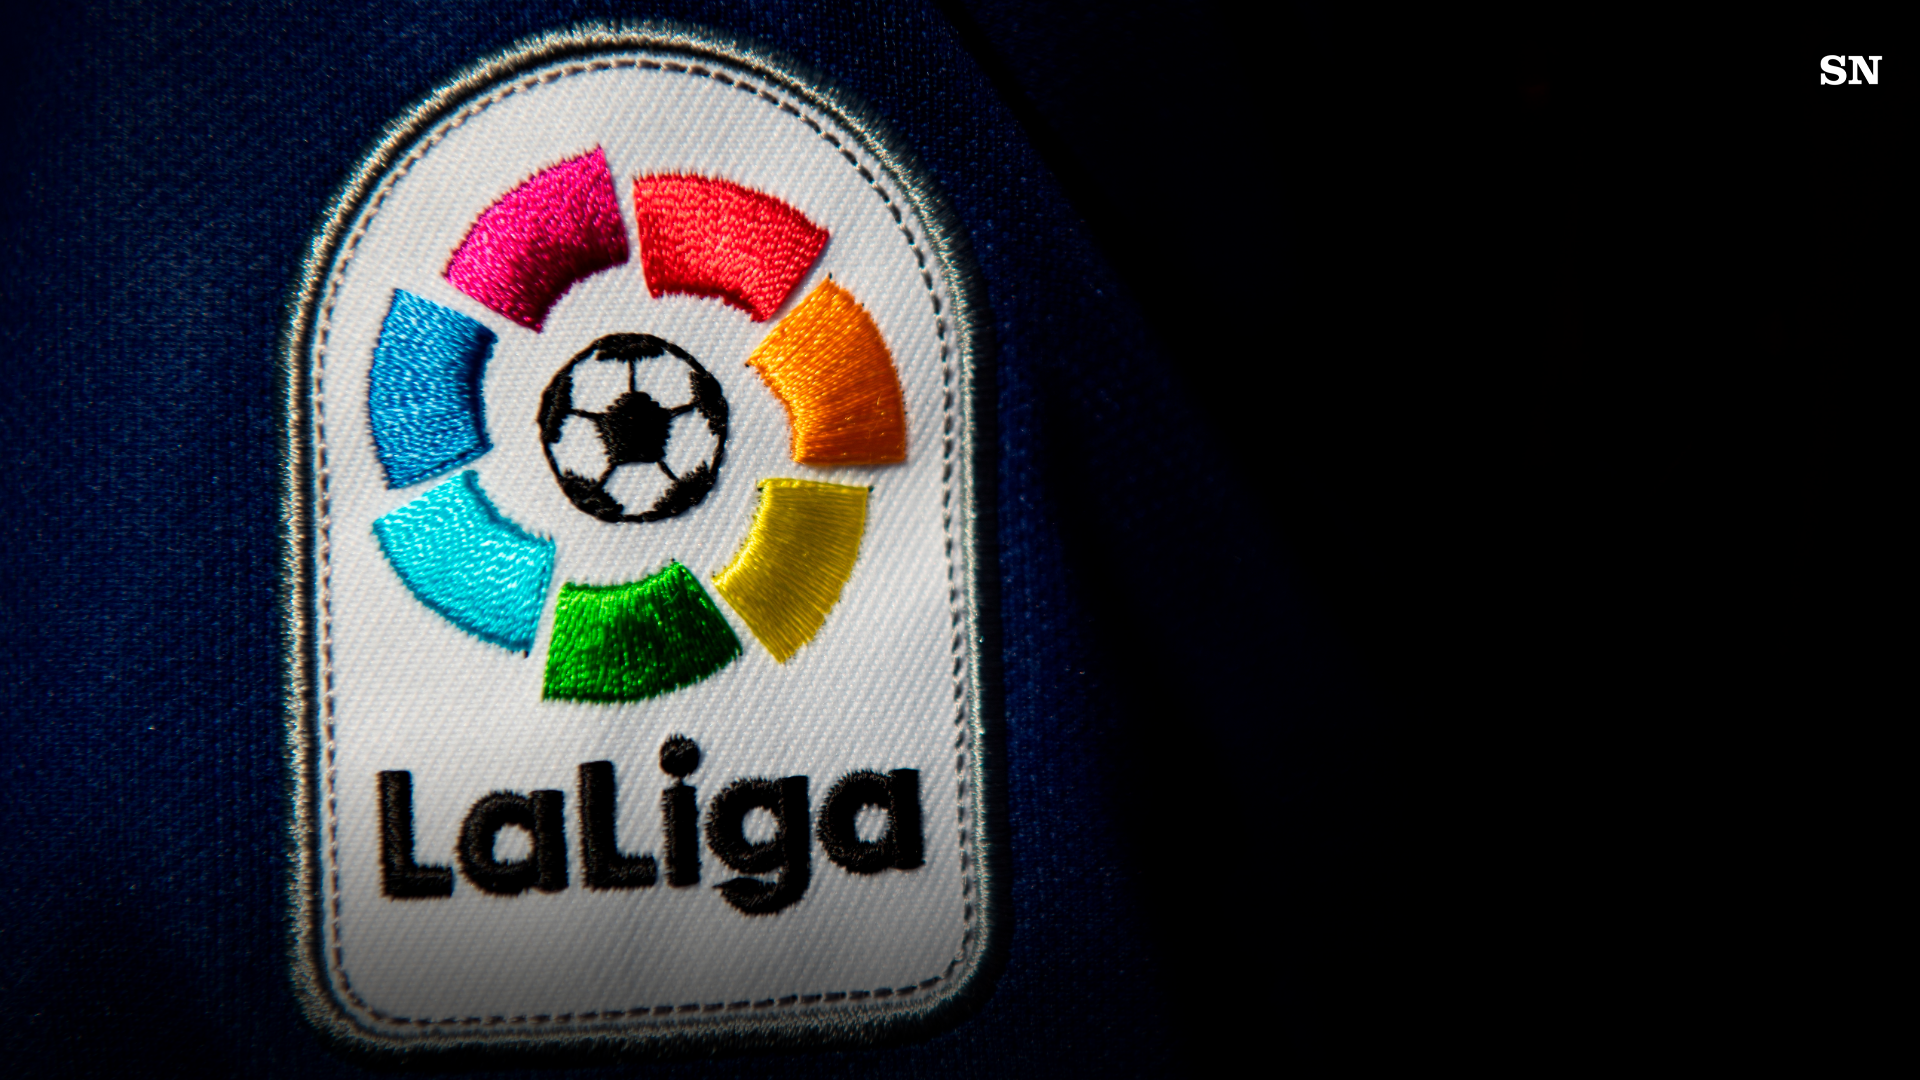 Spain : La Liga opts for a new logo - Mega Sports